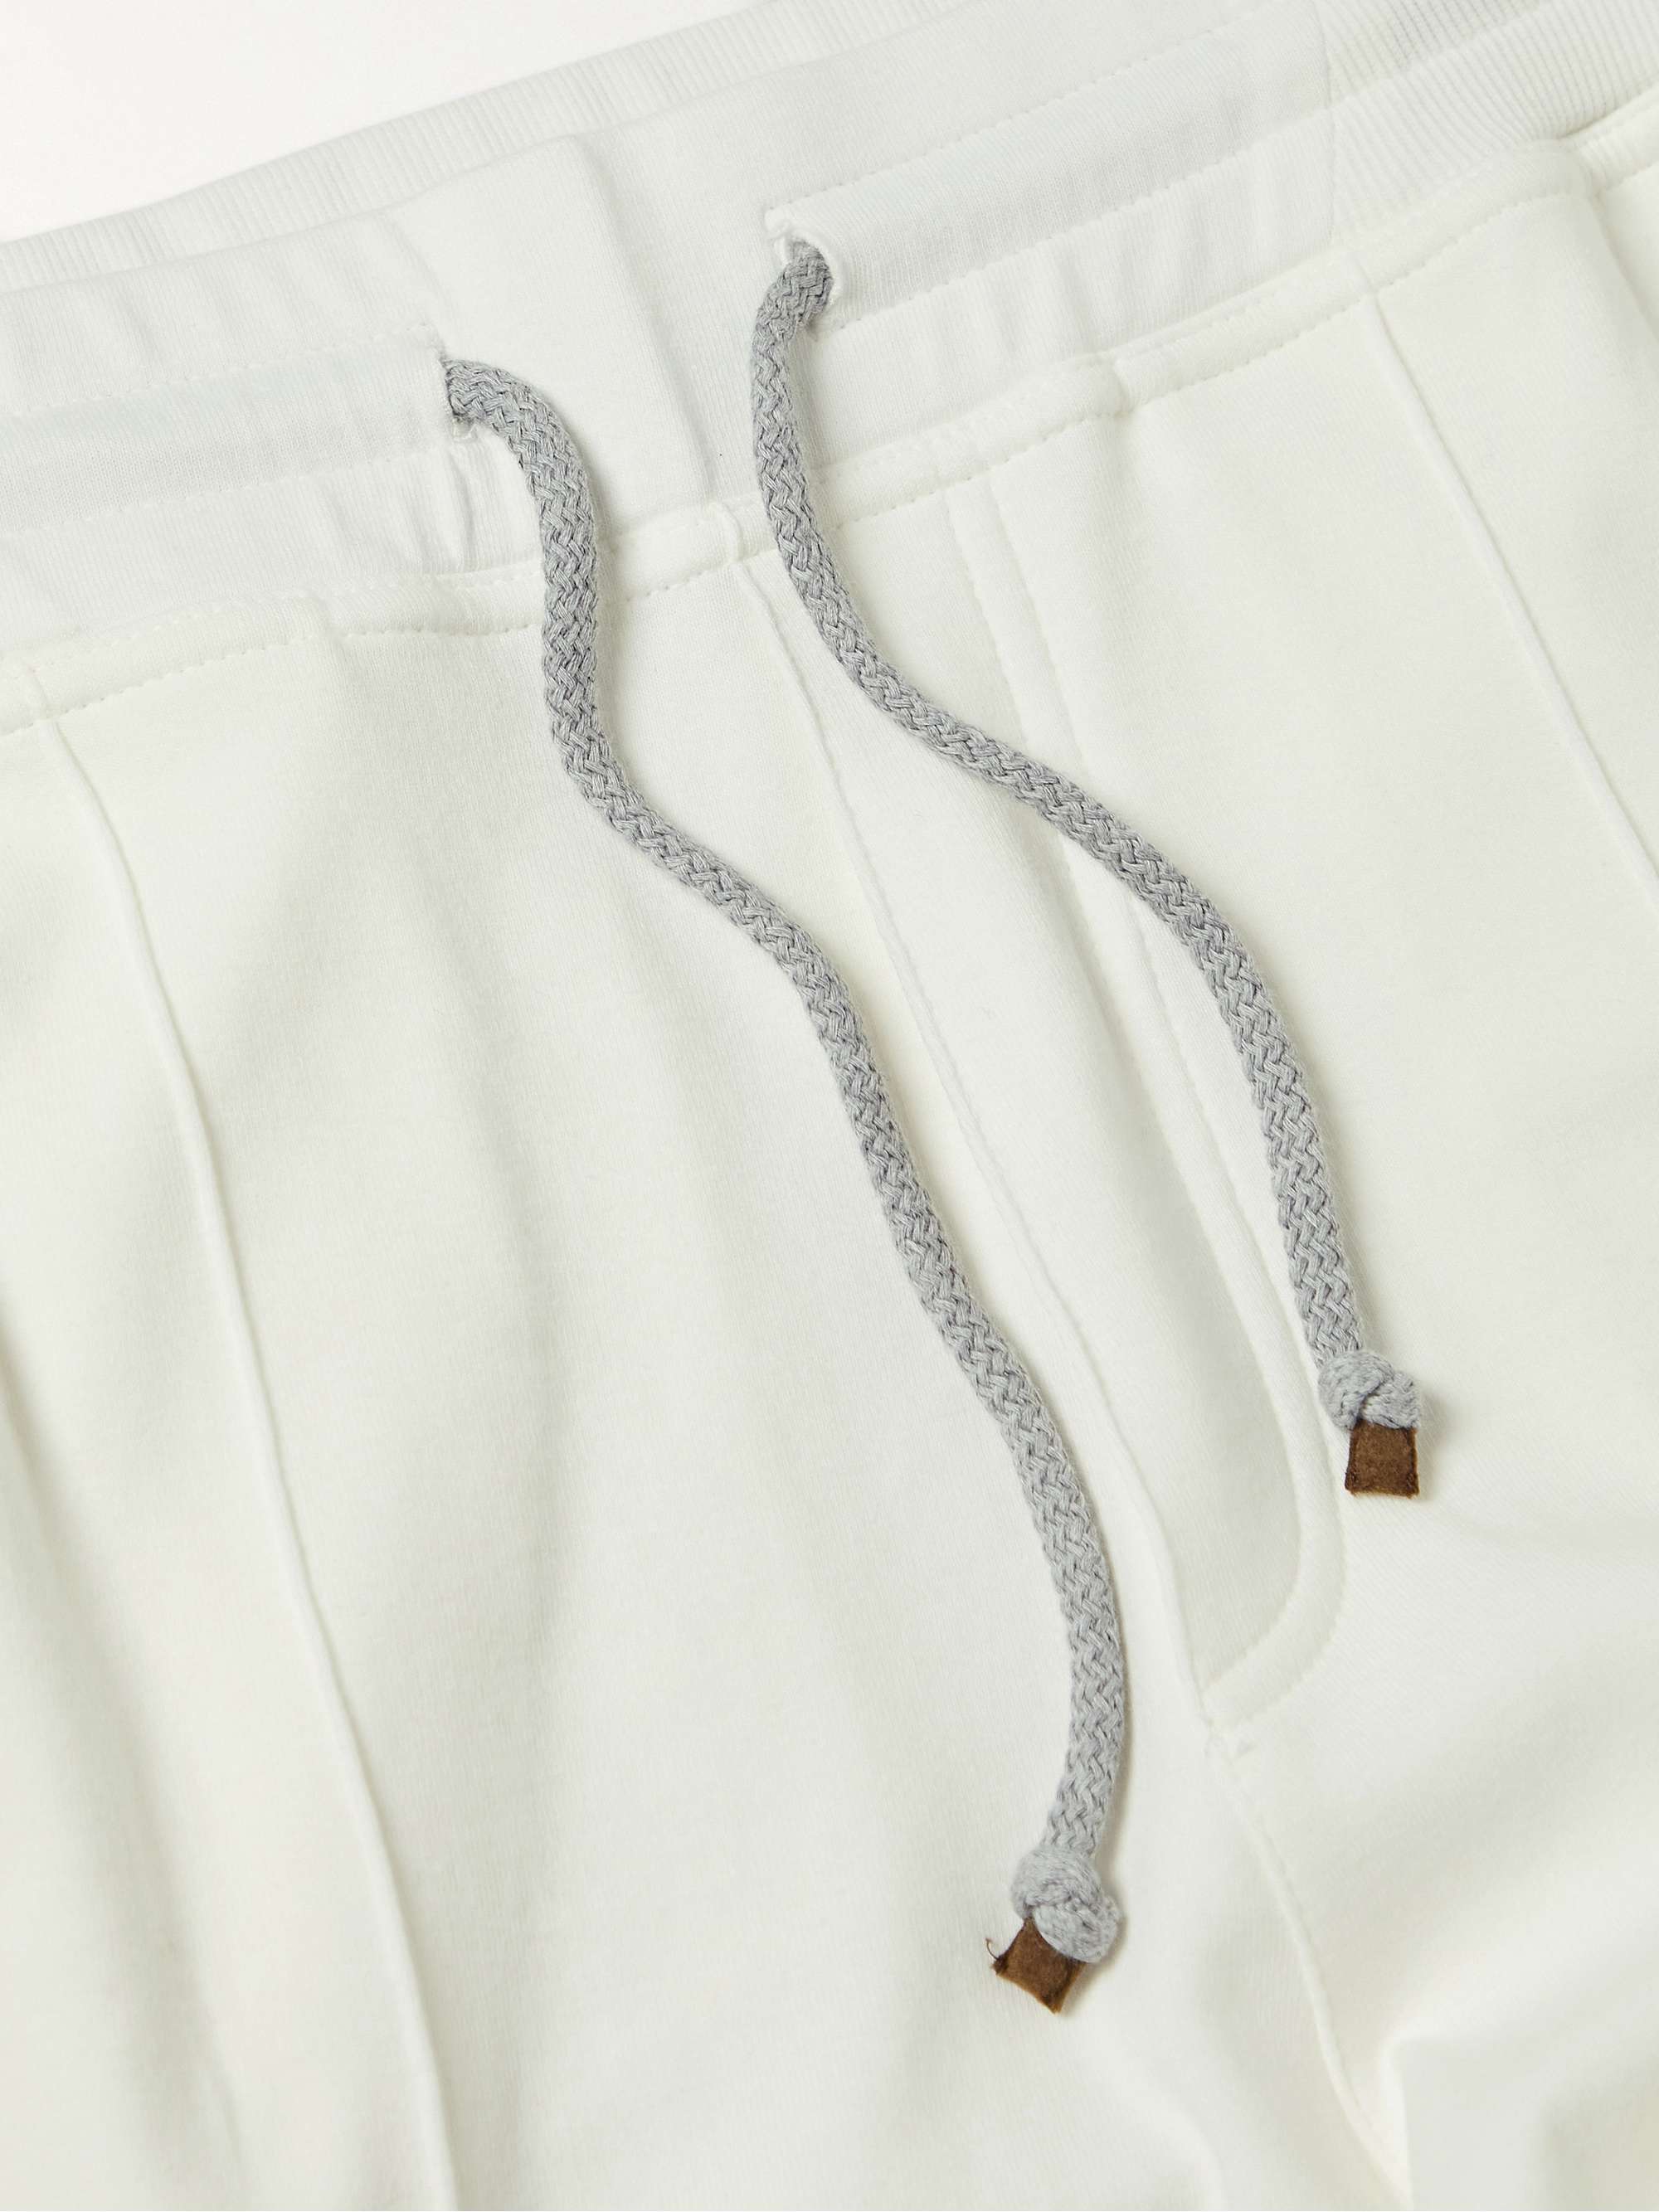 BRUNELLO CUCINELLI Tapered Cotton-Blend Jersey Sweatpants